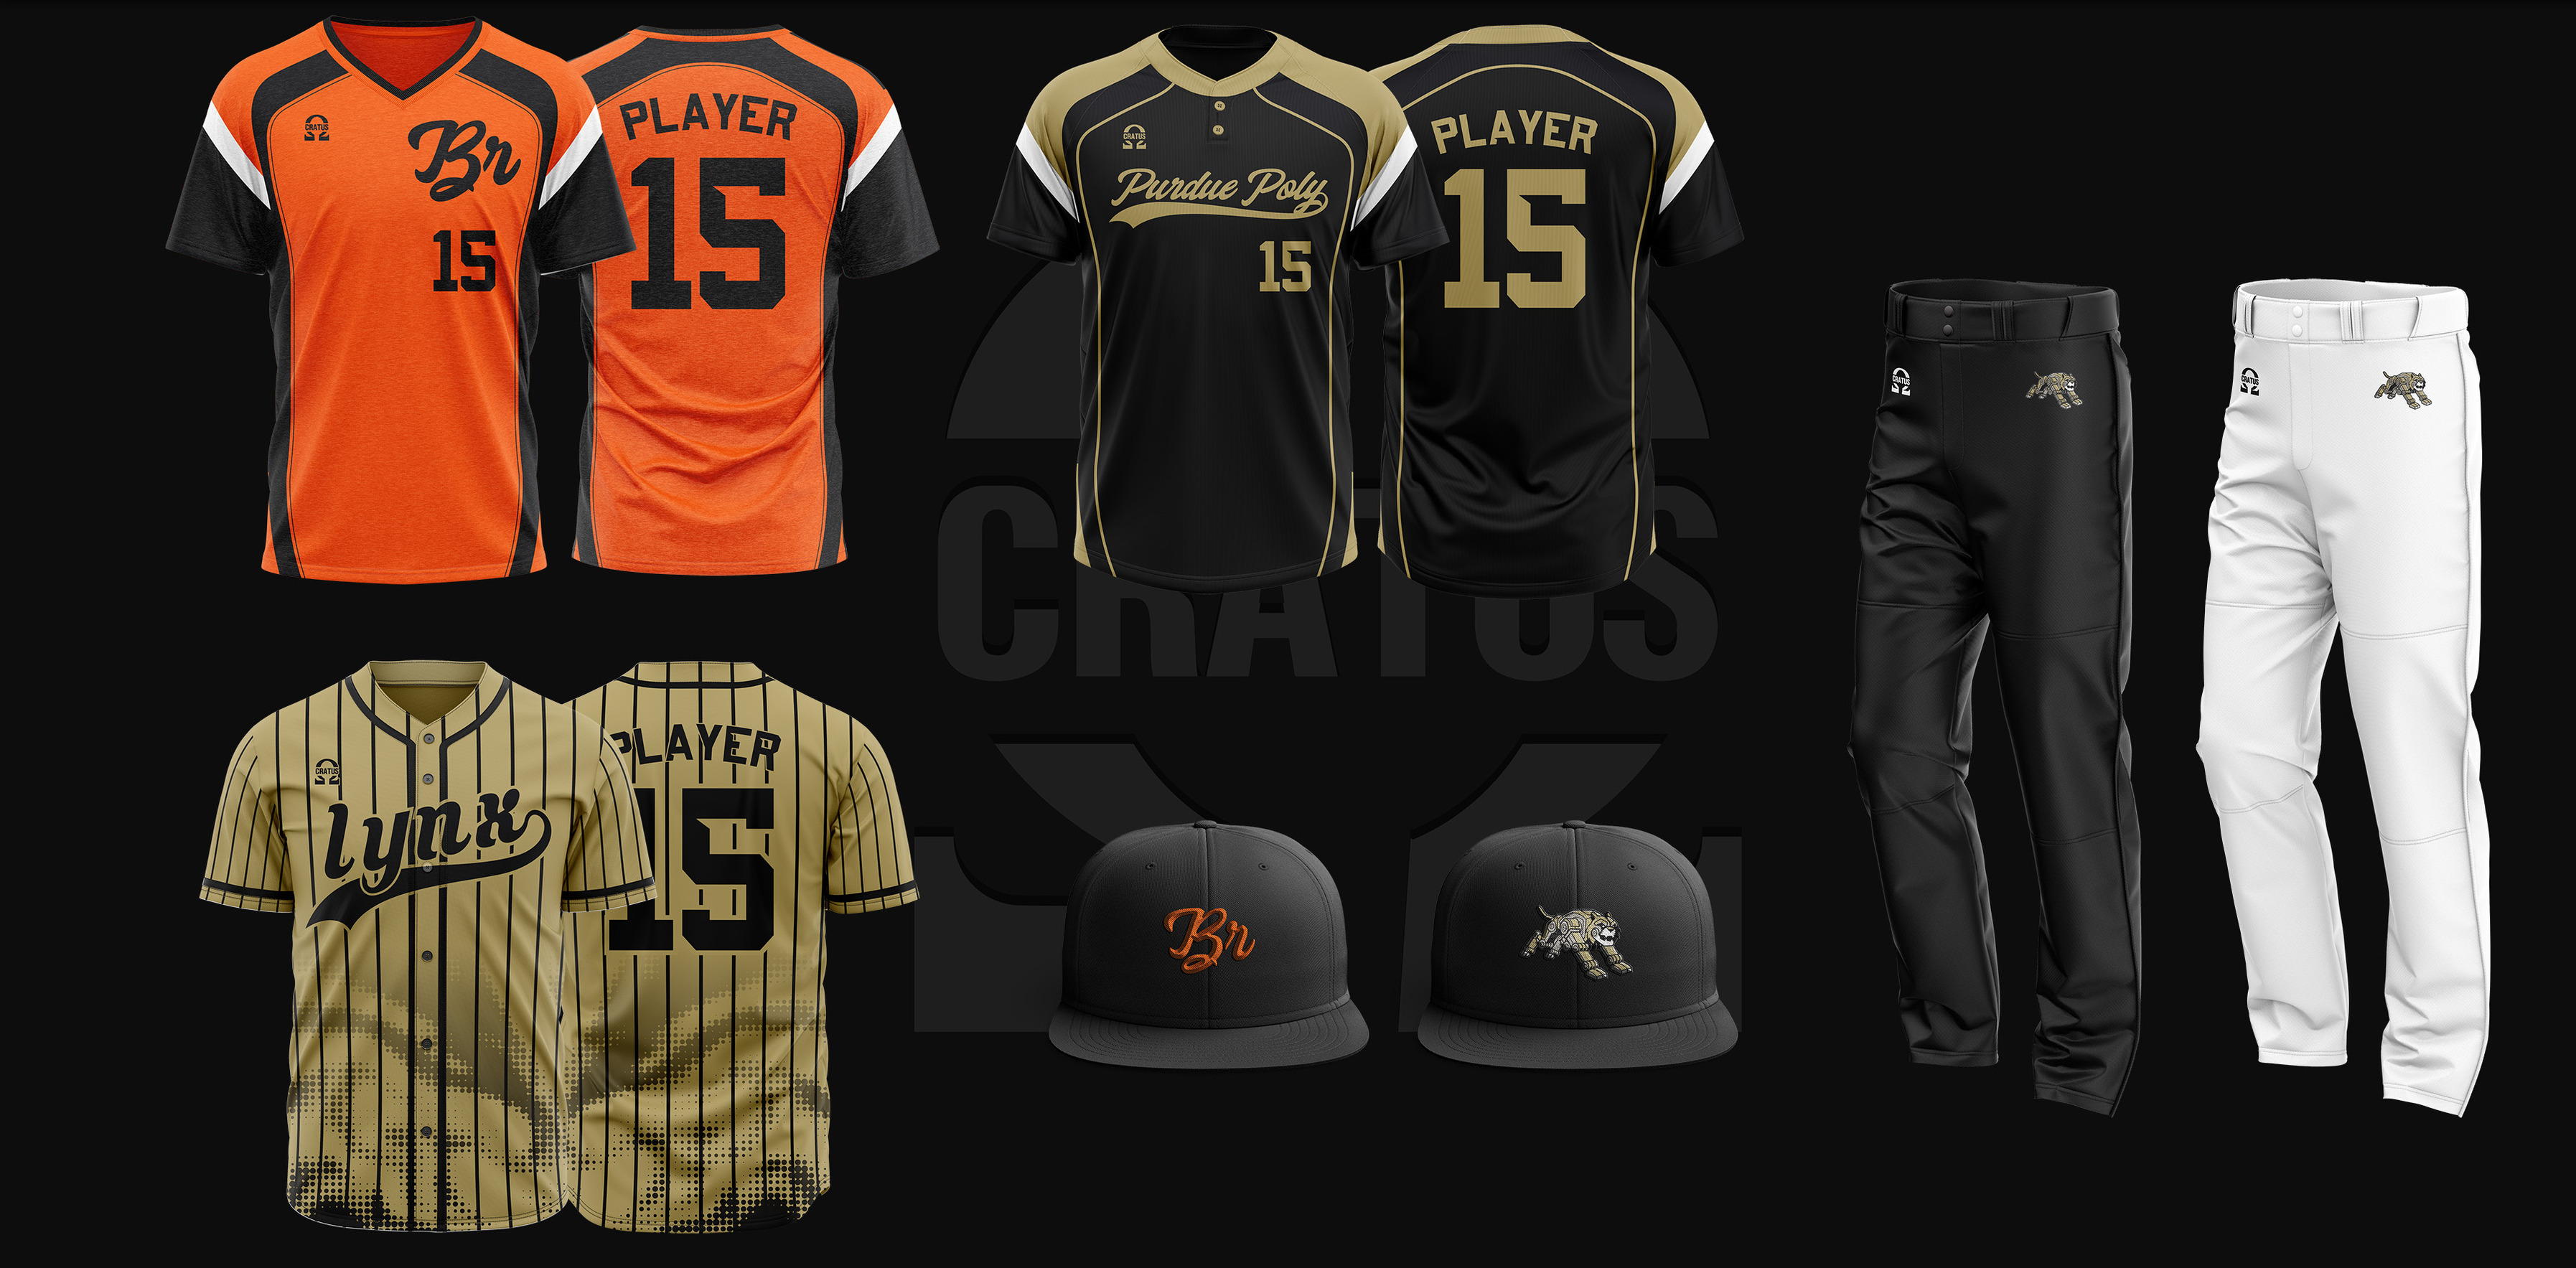 Cratus Sports  Team Uniforms and Custom Sportswear